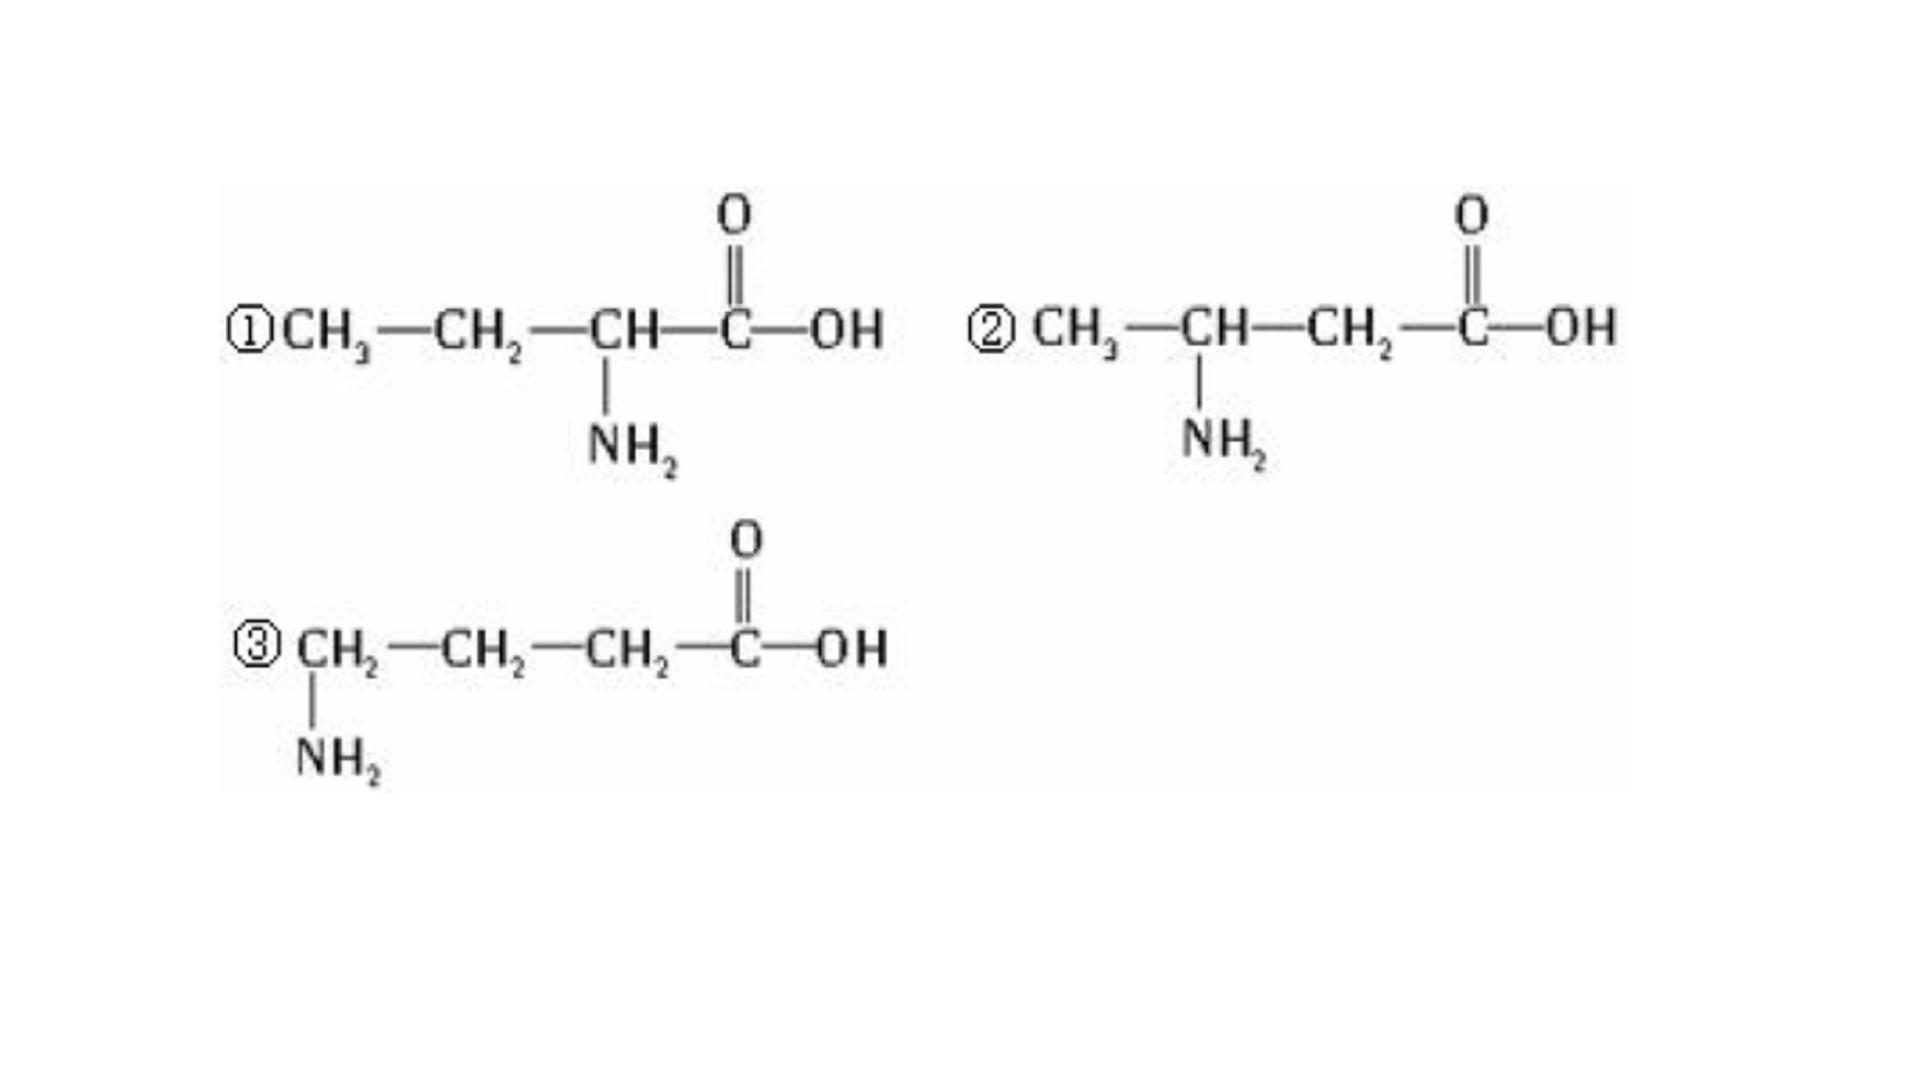 c4h9cl的同分异构体图片